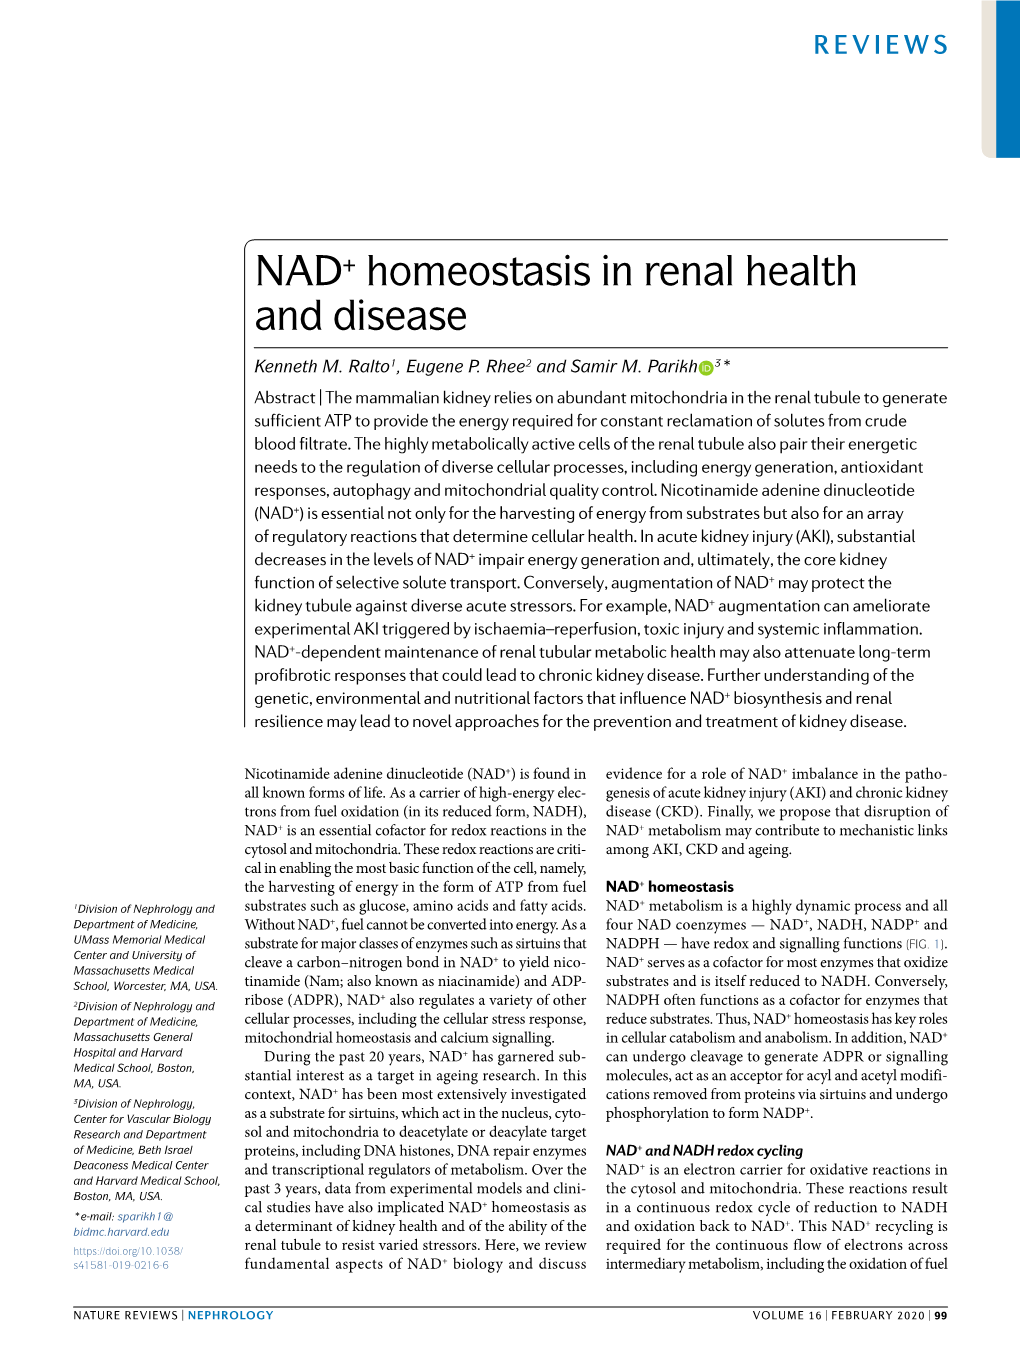 NAD+ Homeostasis in Renal Health and Disease